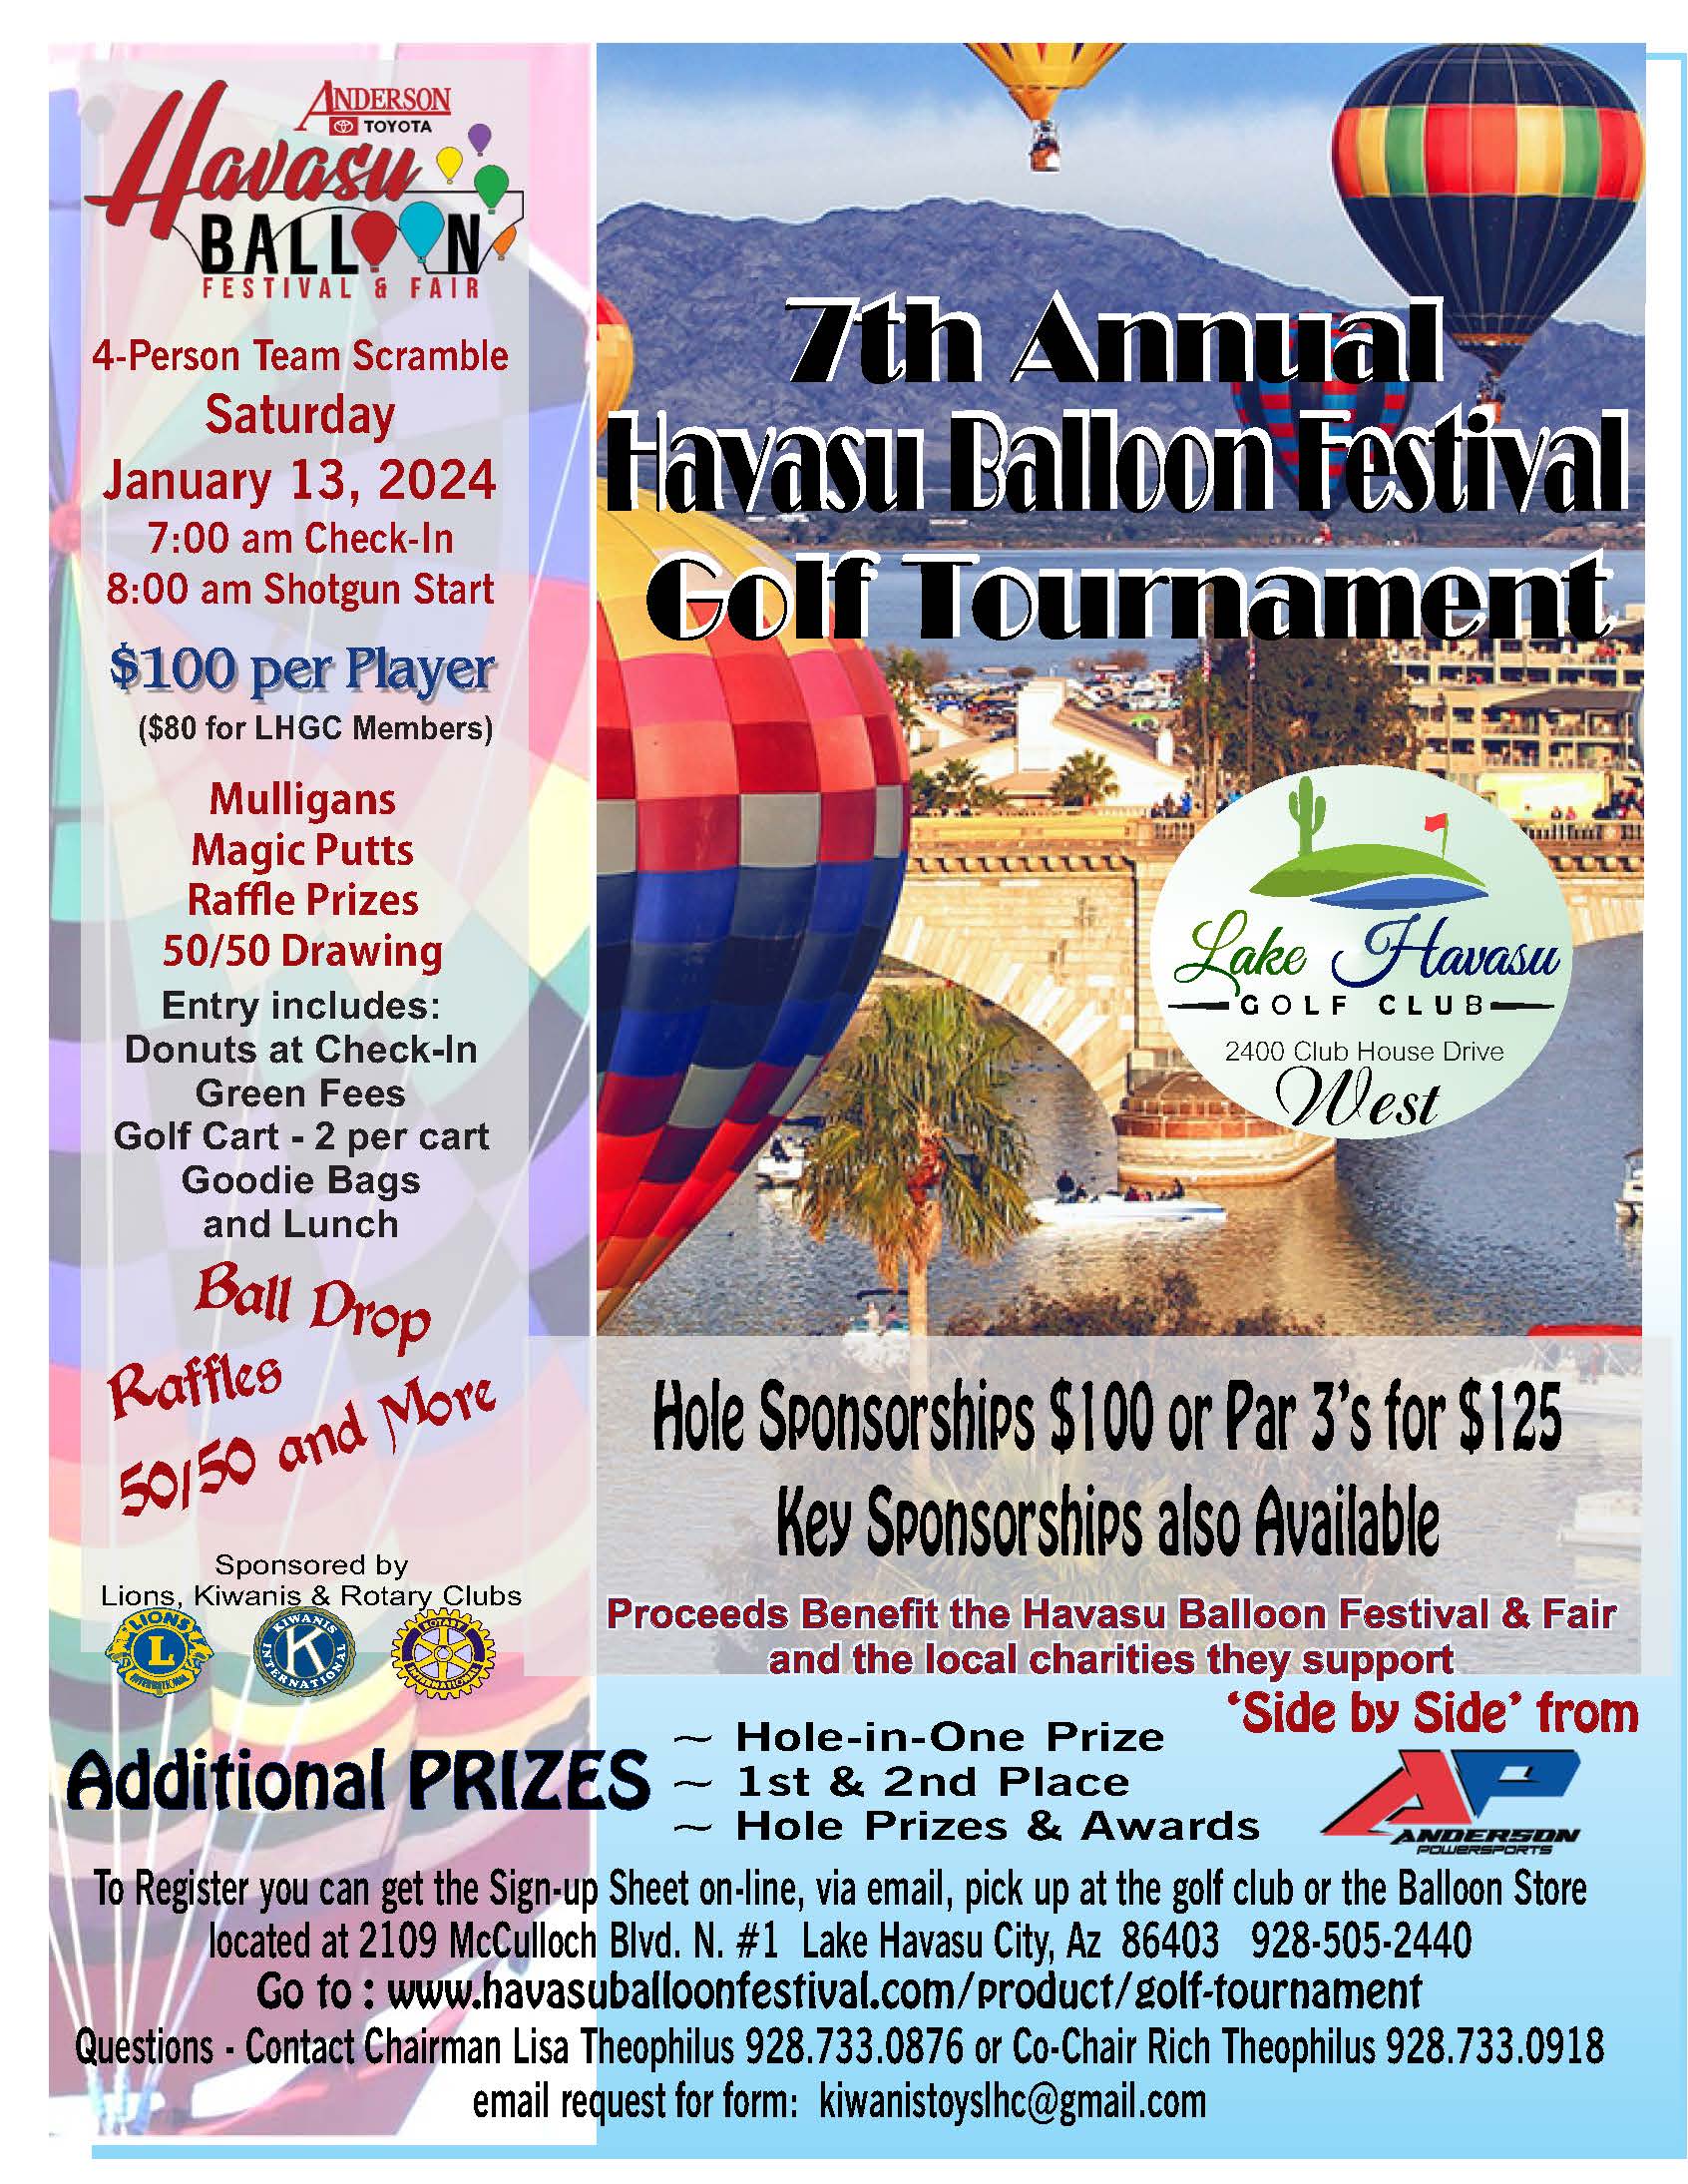 7th Annual Havasu Balloon Festival Golf Tournament